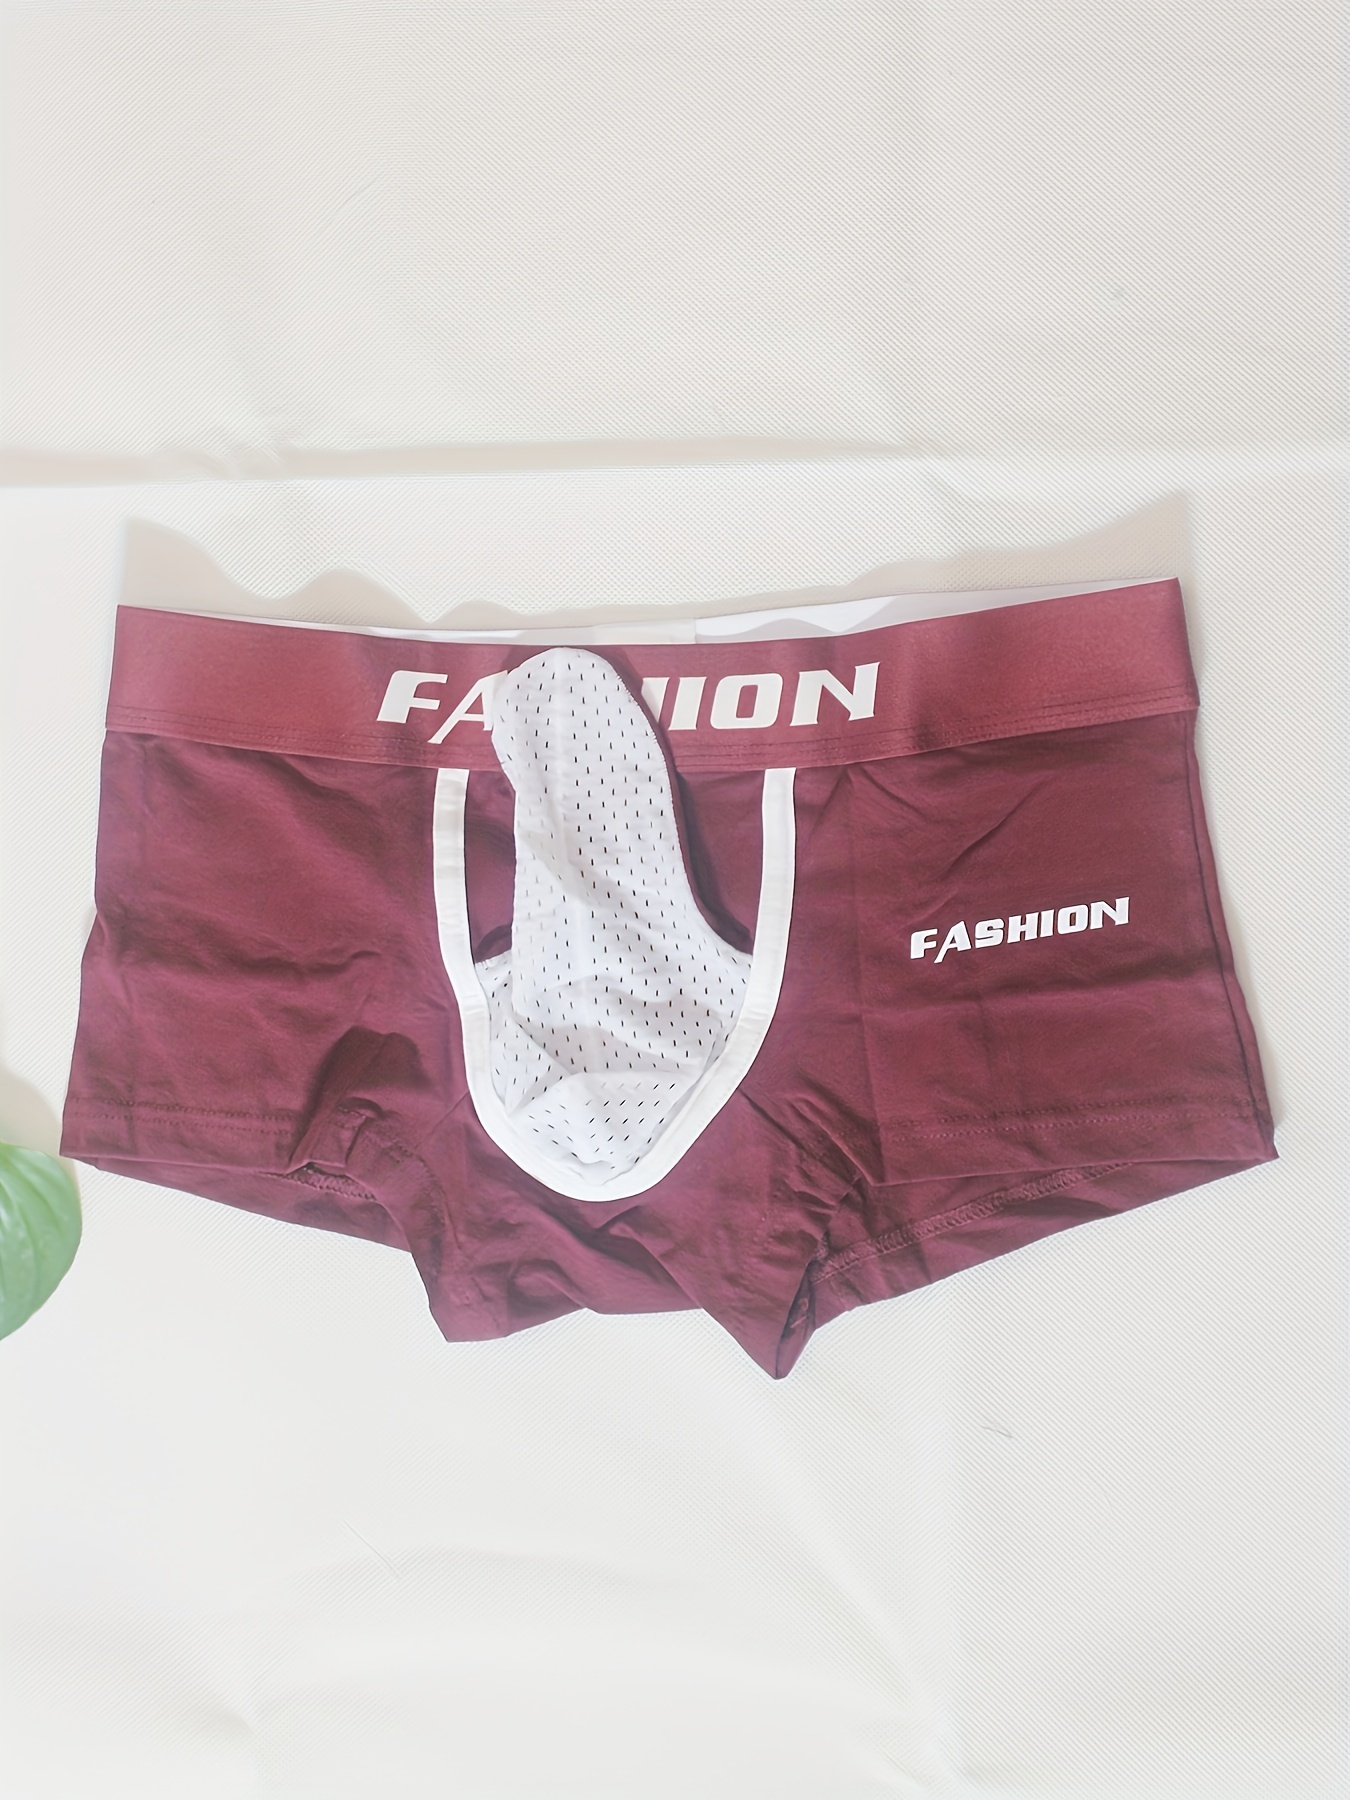 Mens Penis Hole Boxer Shorts Men Open Front Underwear Sexy Pouch Underpants  CA 